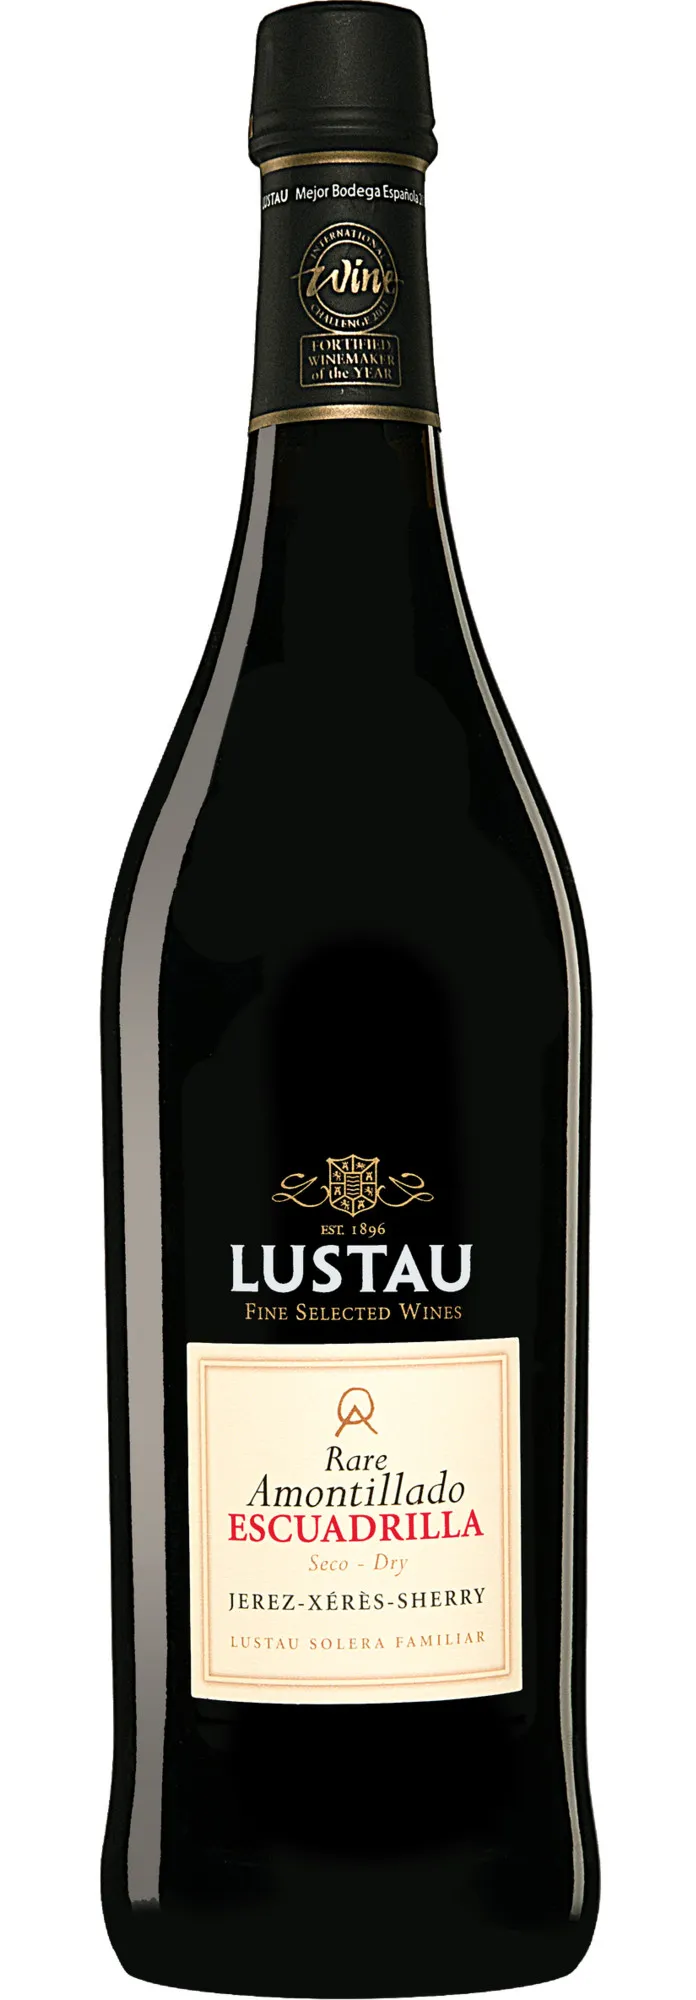 Bottle of Lustau Jerez-Xeres-Sherry Reserva Solera Rare Amontillado Escuadrillawith label visible